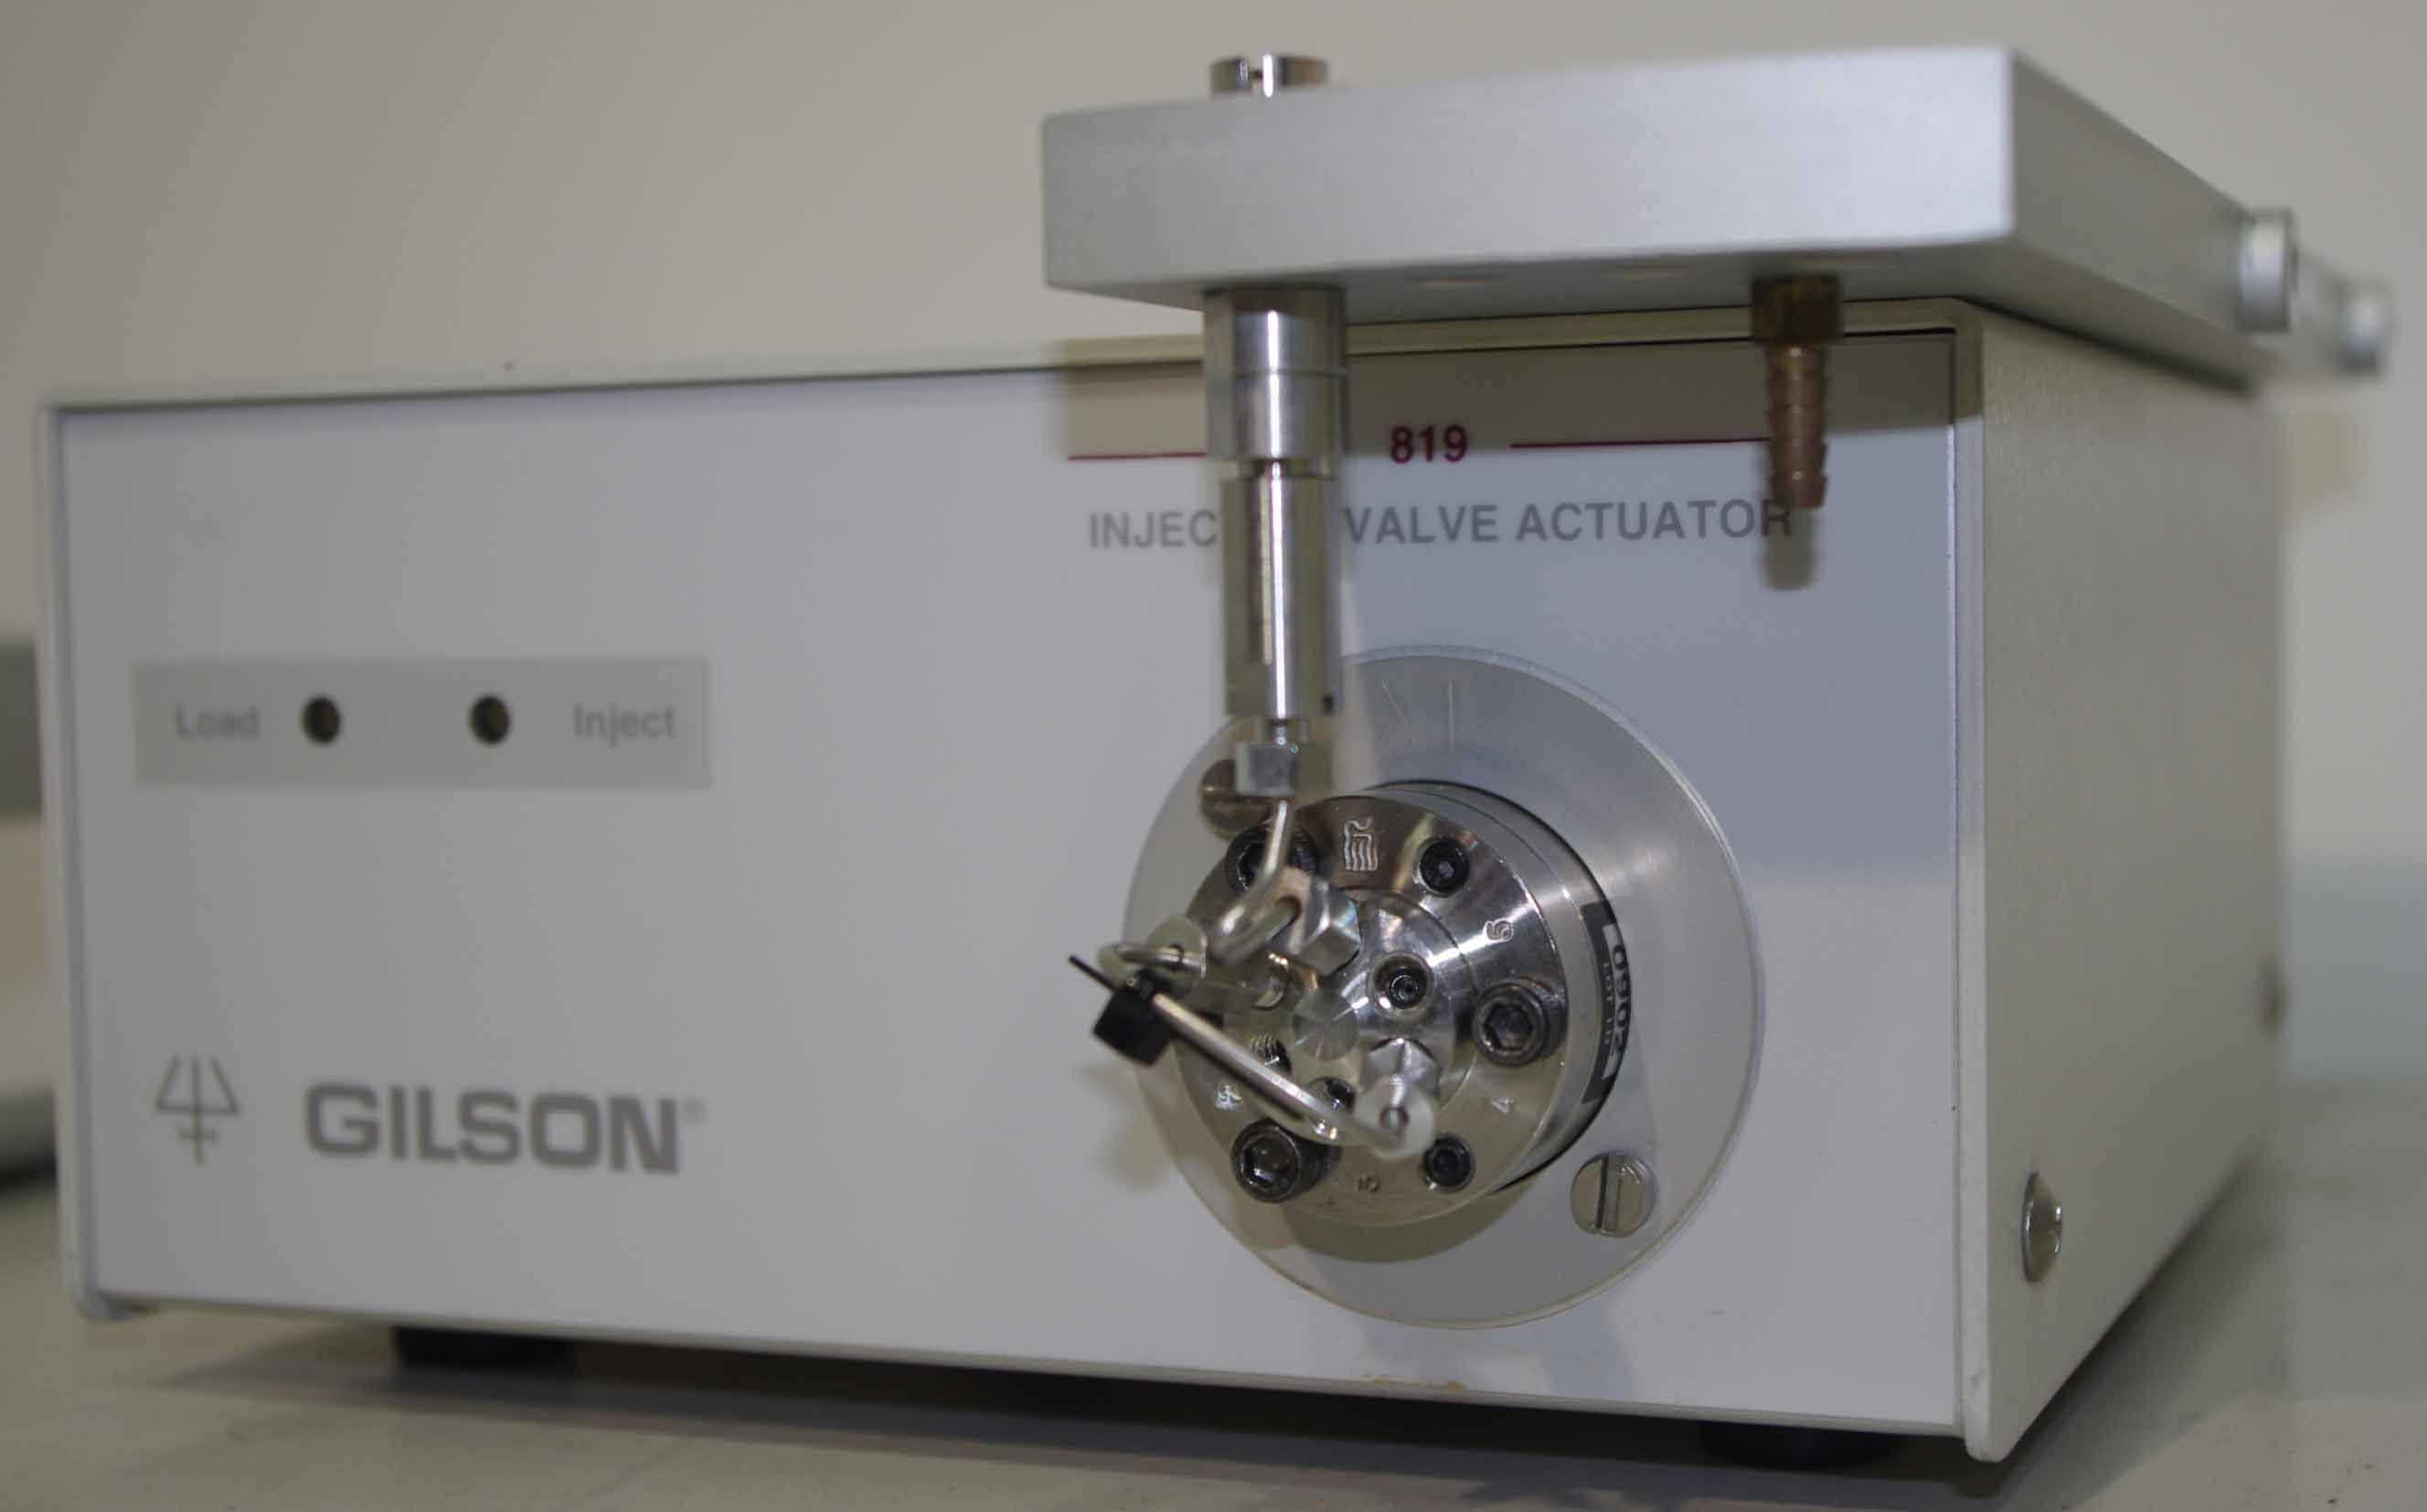 gilson 819 injection valve actuator nice